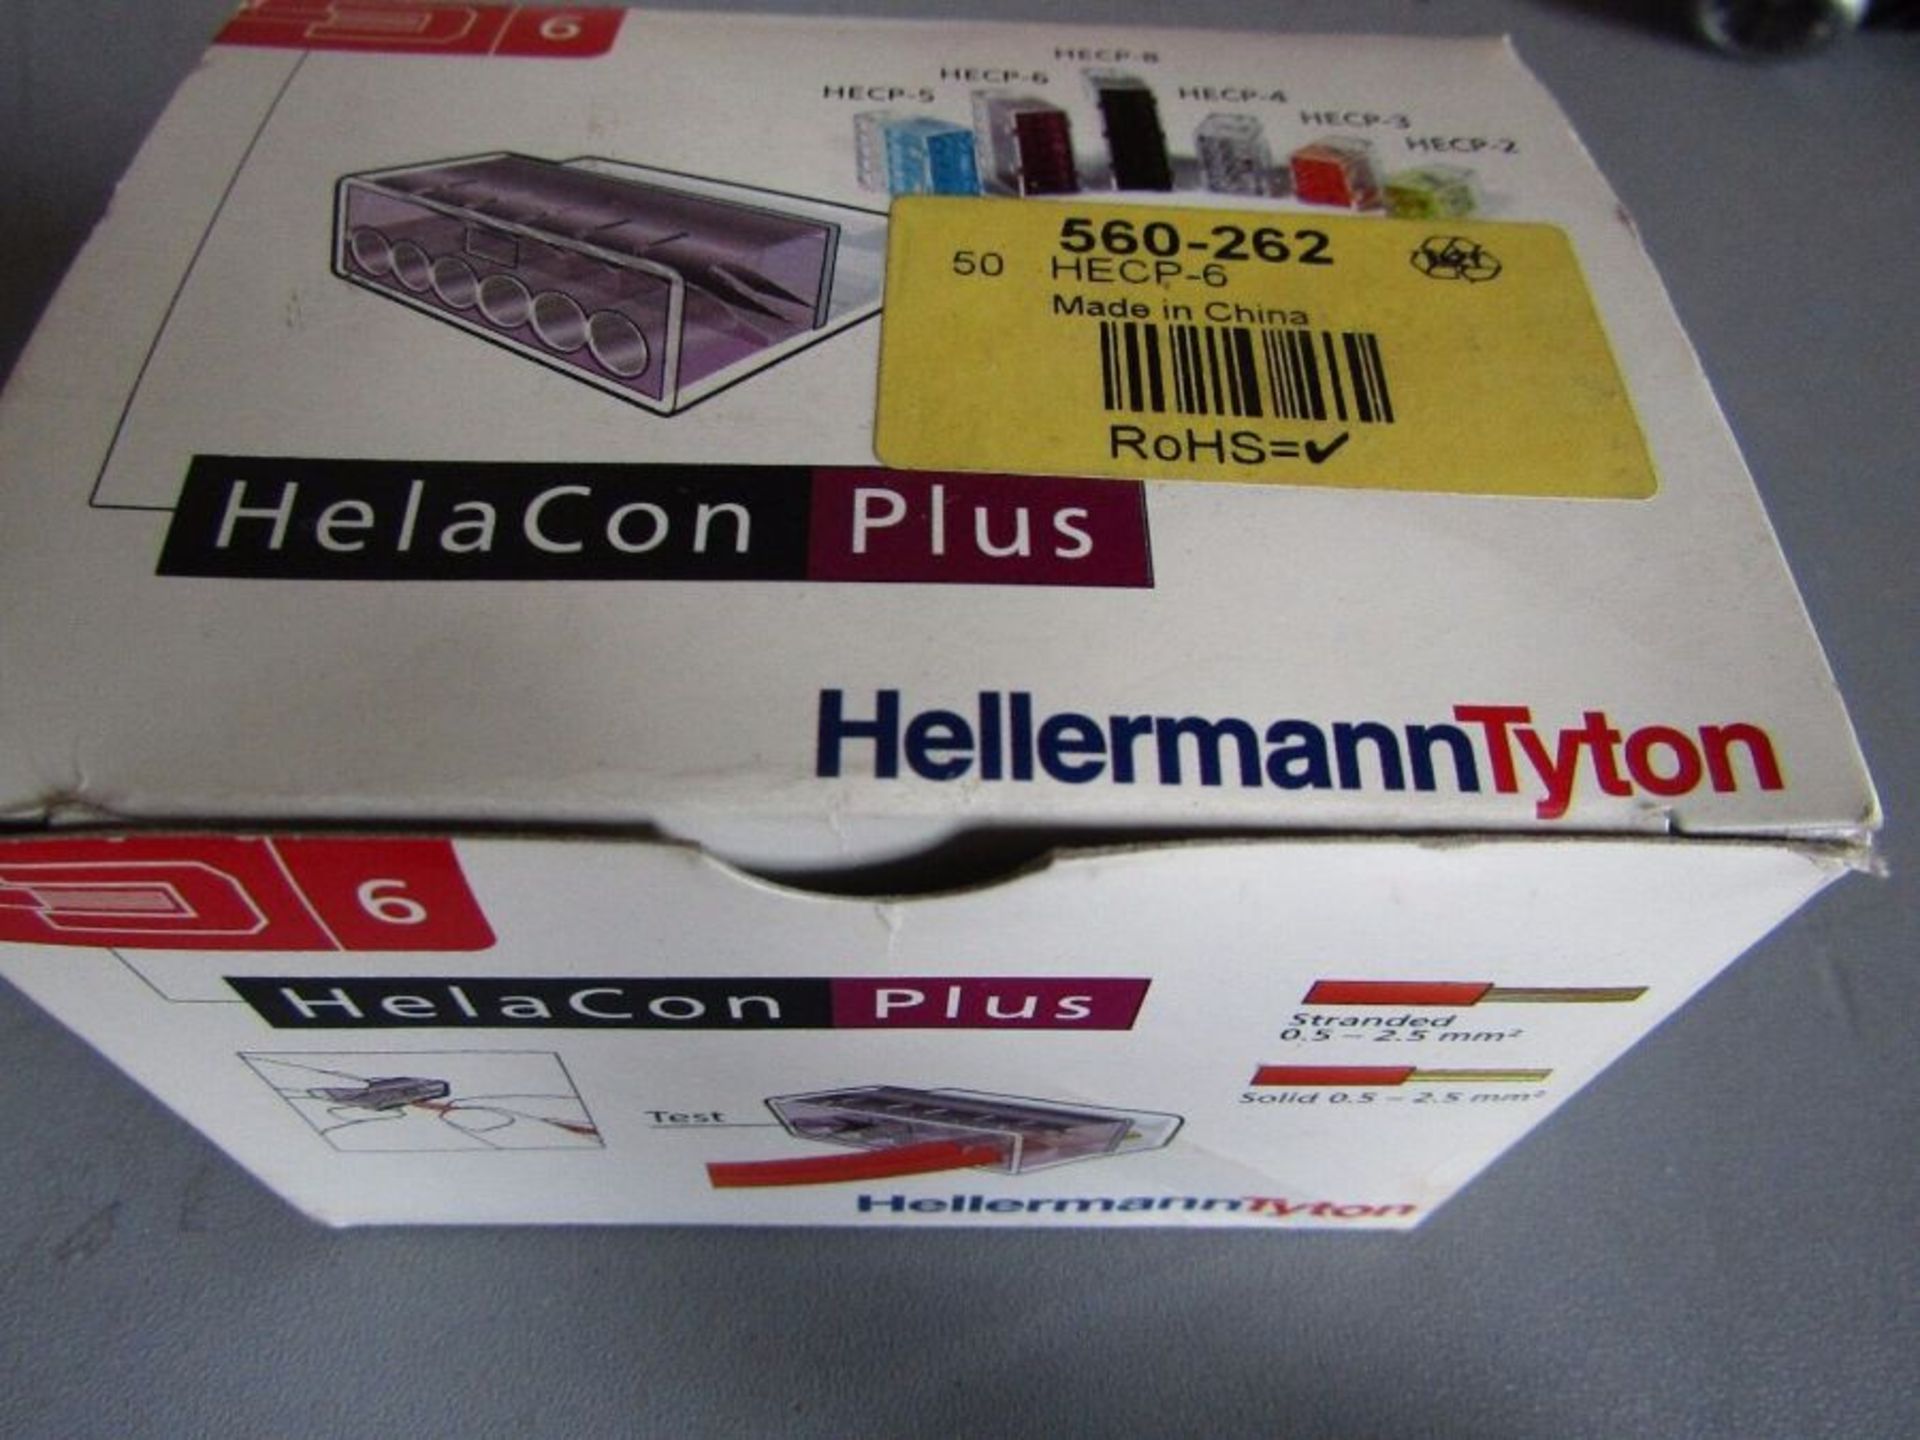 20 boxes of Box of 50 x 6 Way HelaCon Plus Terminal Block Push In Block HECP-6 1005r1 560262 - Image 2 of 2